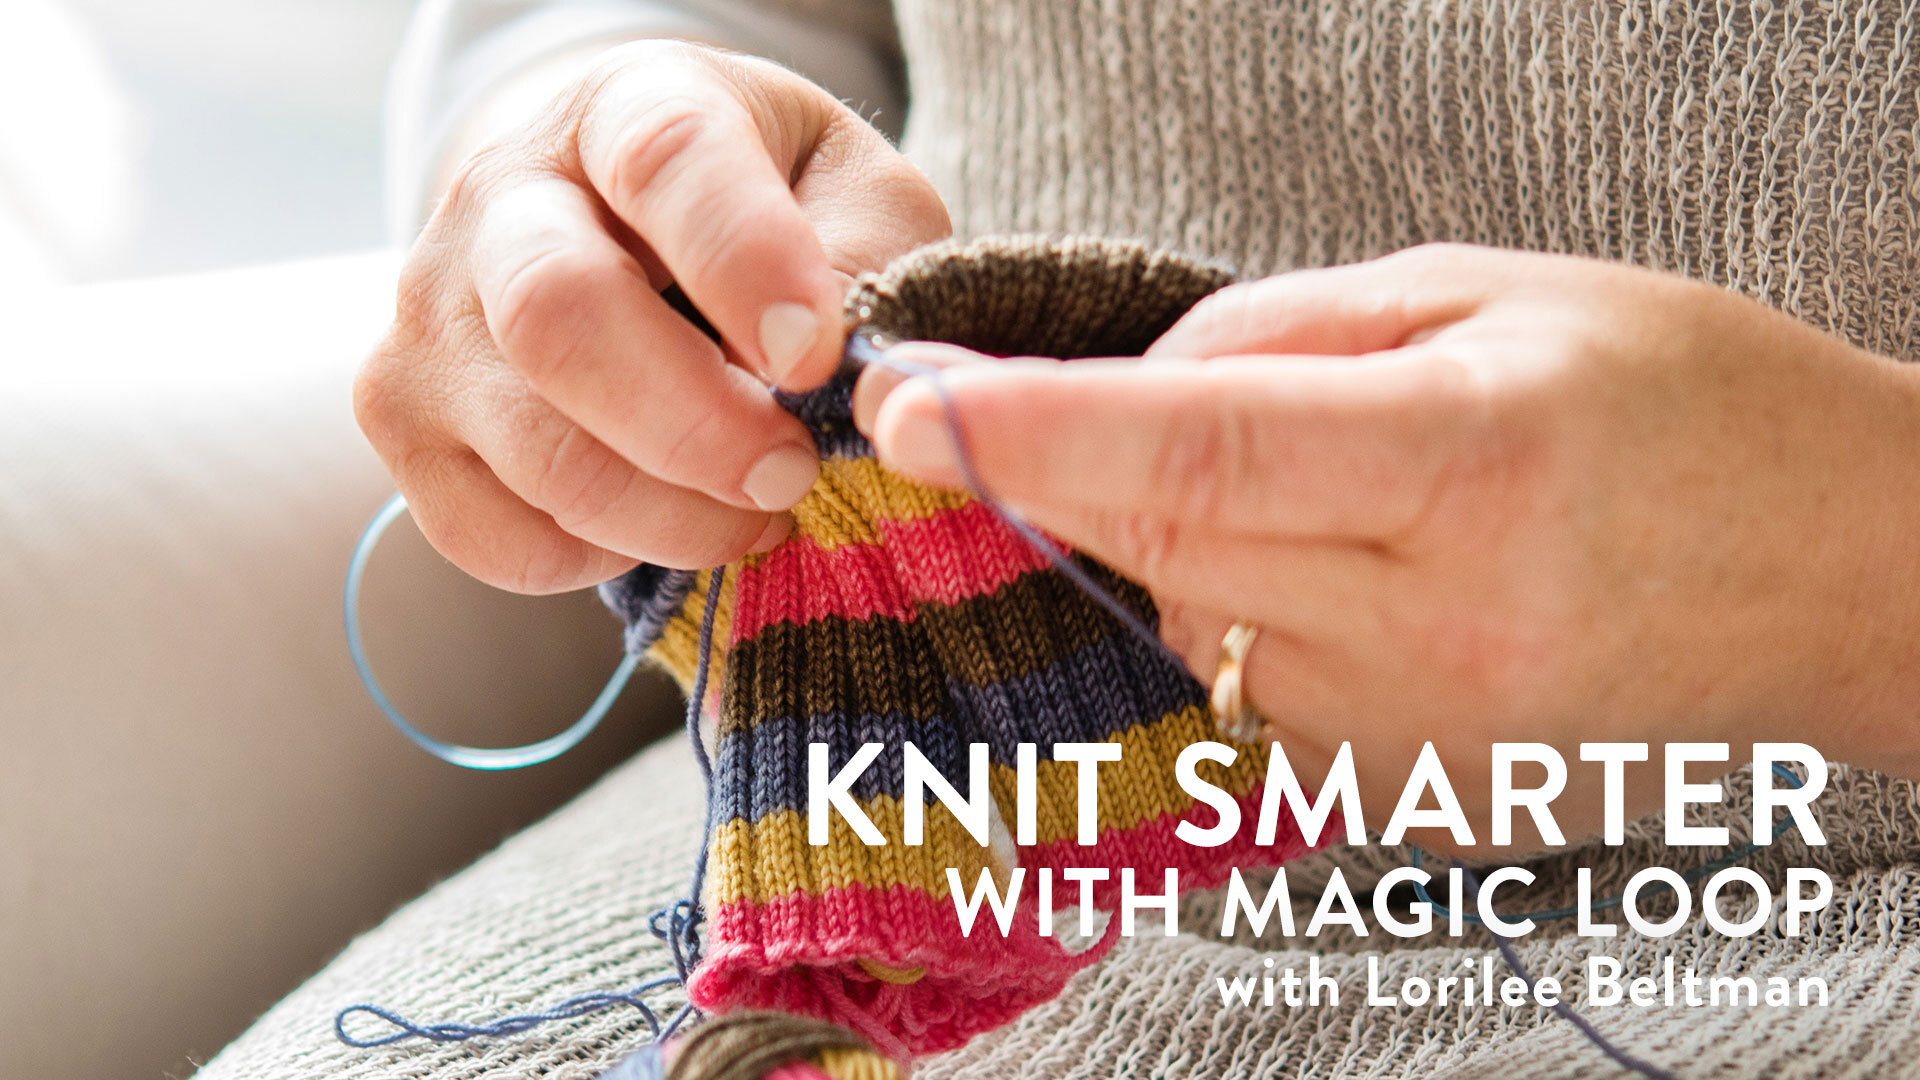 Long Island Sewing Teacher: Terial Magic on Knits